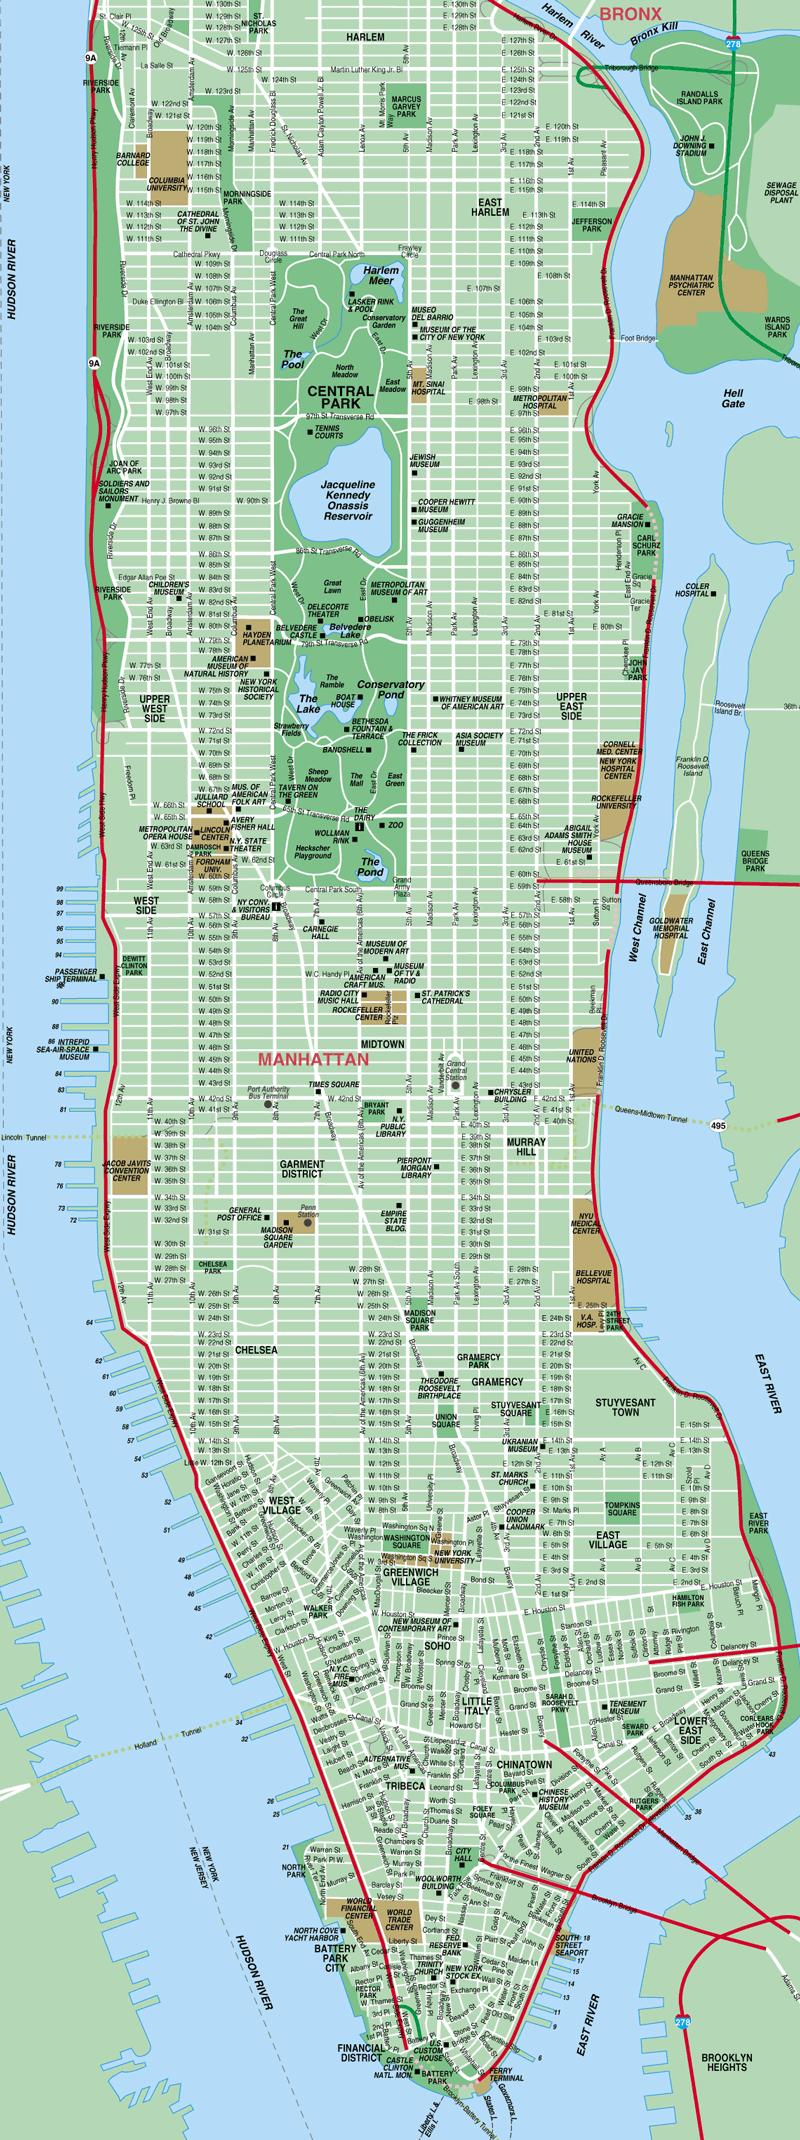 Manhattan kartan - Detaljerad karta över Manhattan (New York - USA)